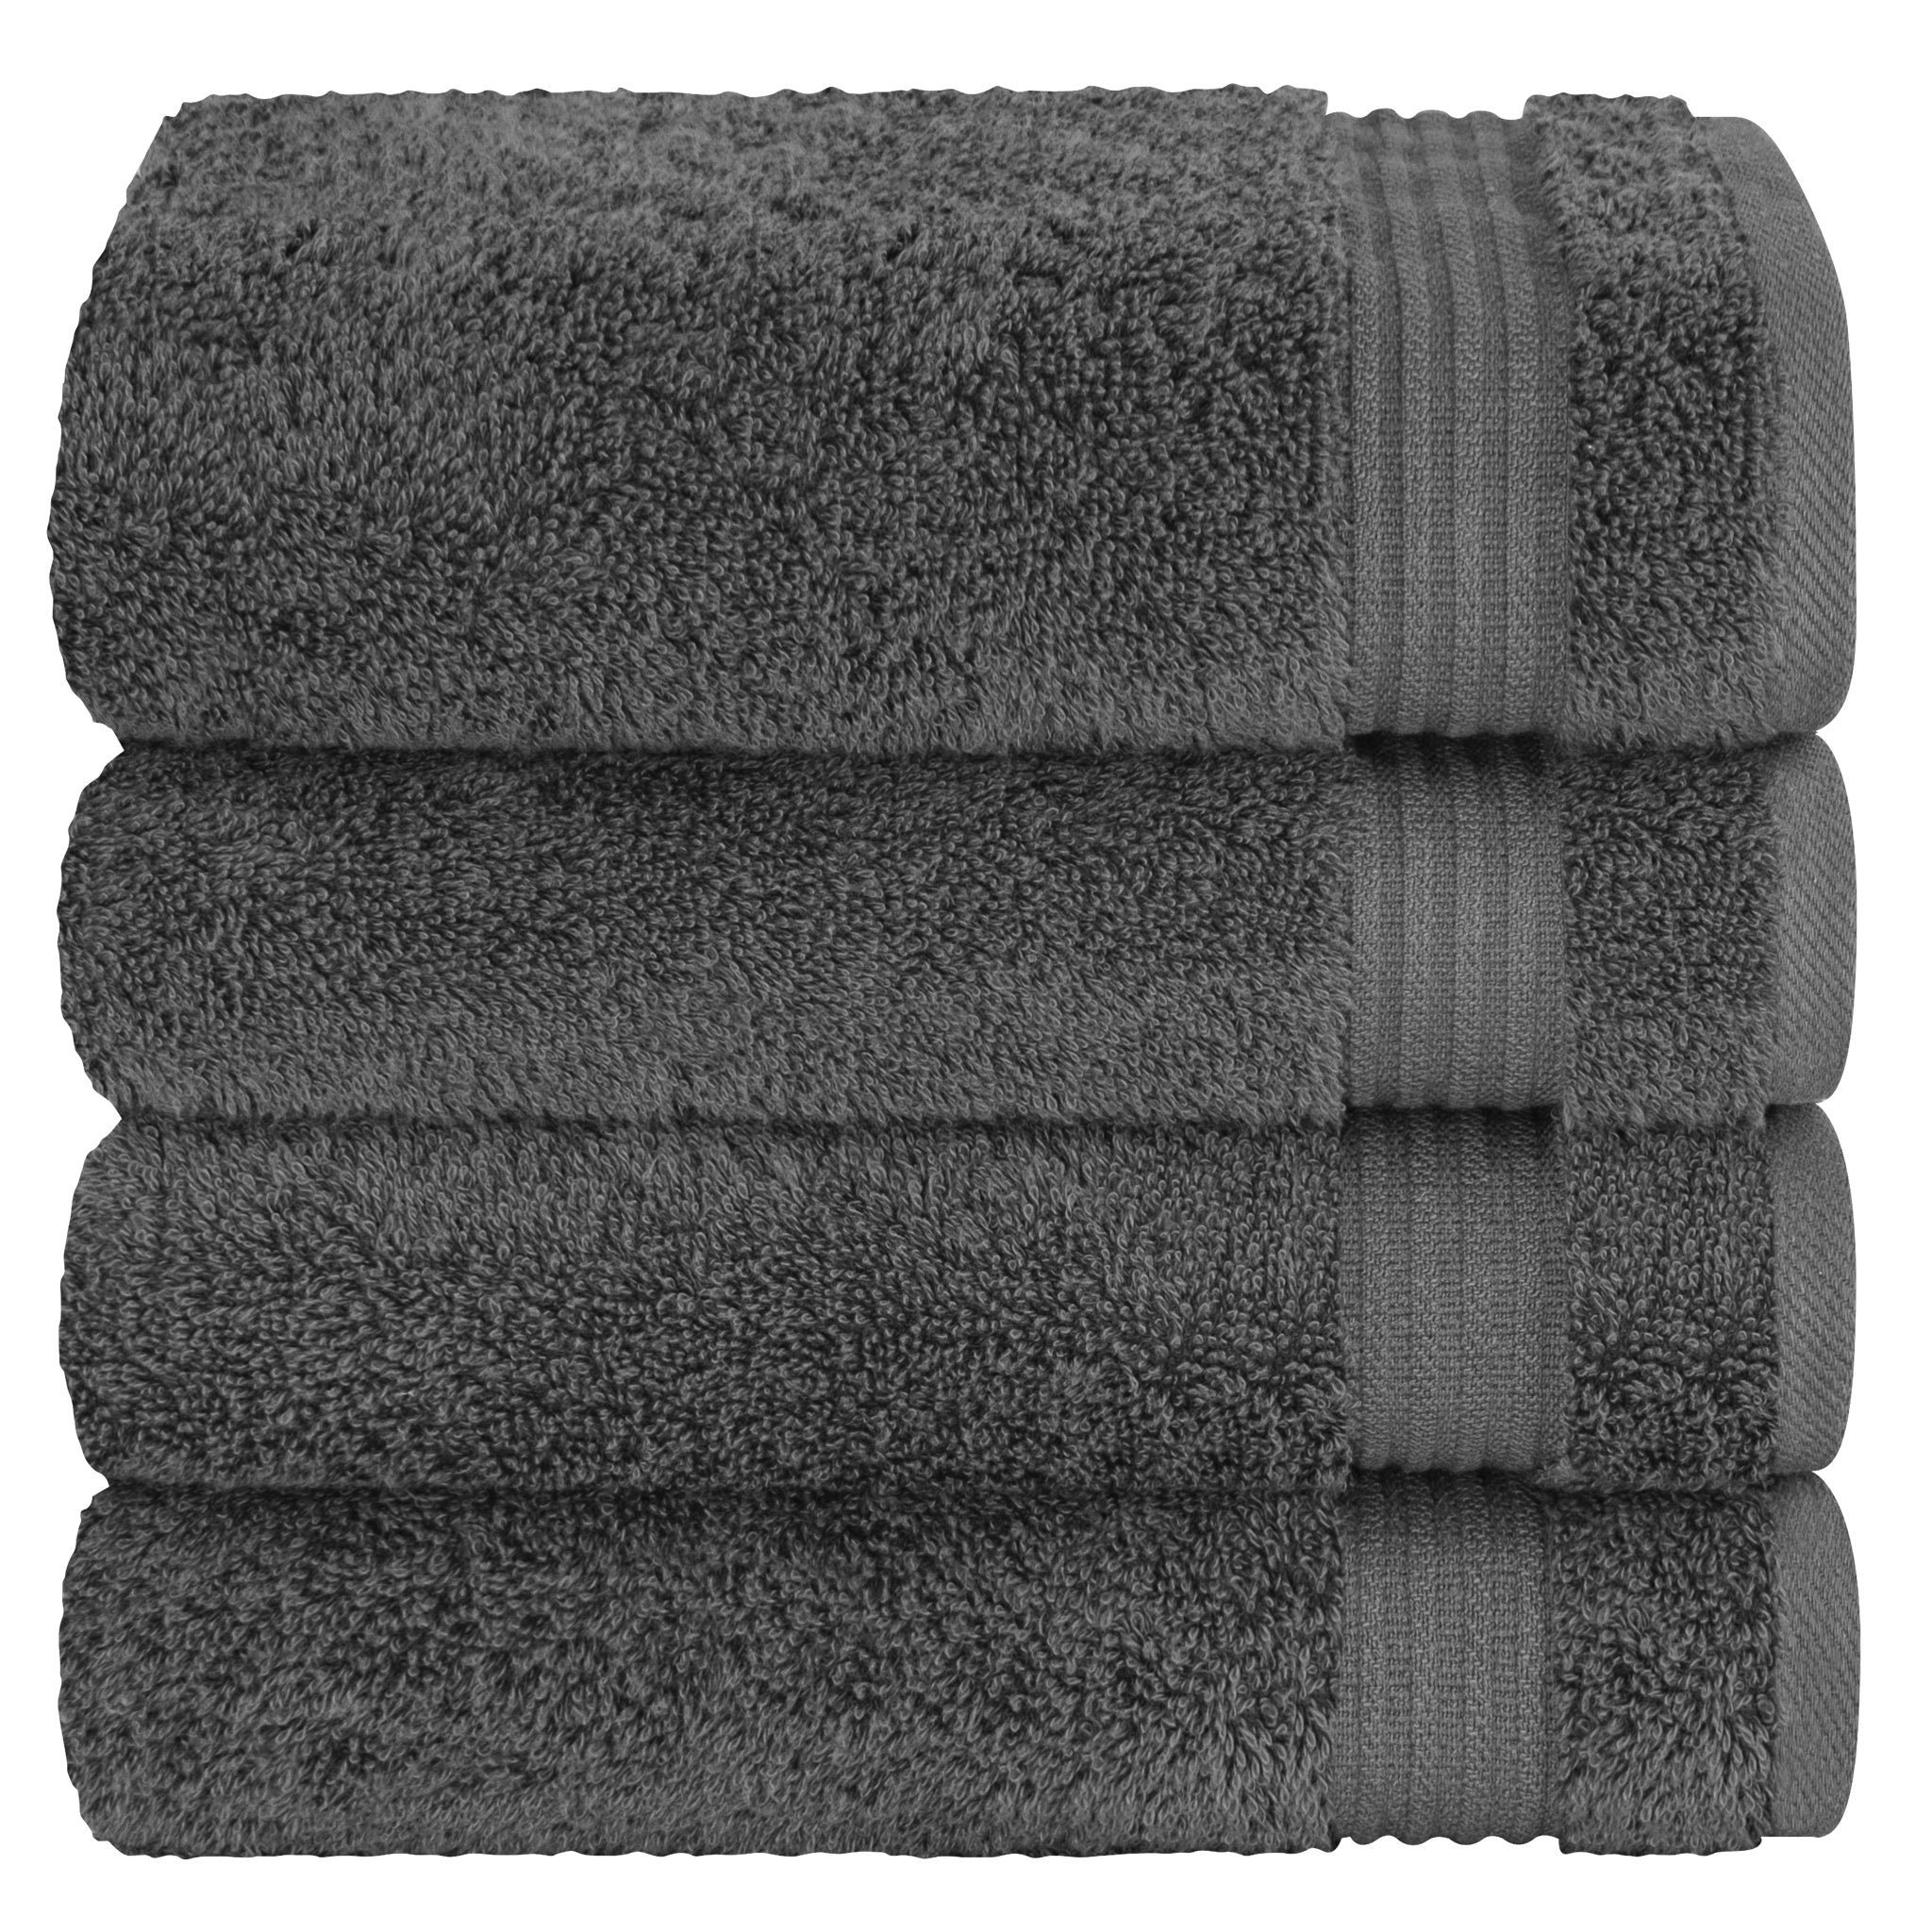 American Soft Linen Bekos 100% Cotton Turkish Towels, 4 Piece Hand Towel Set -gray-05